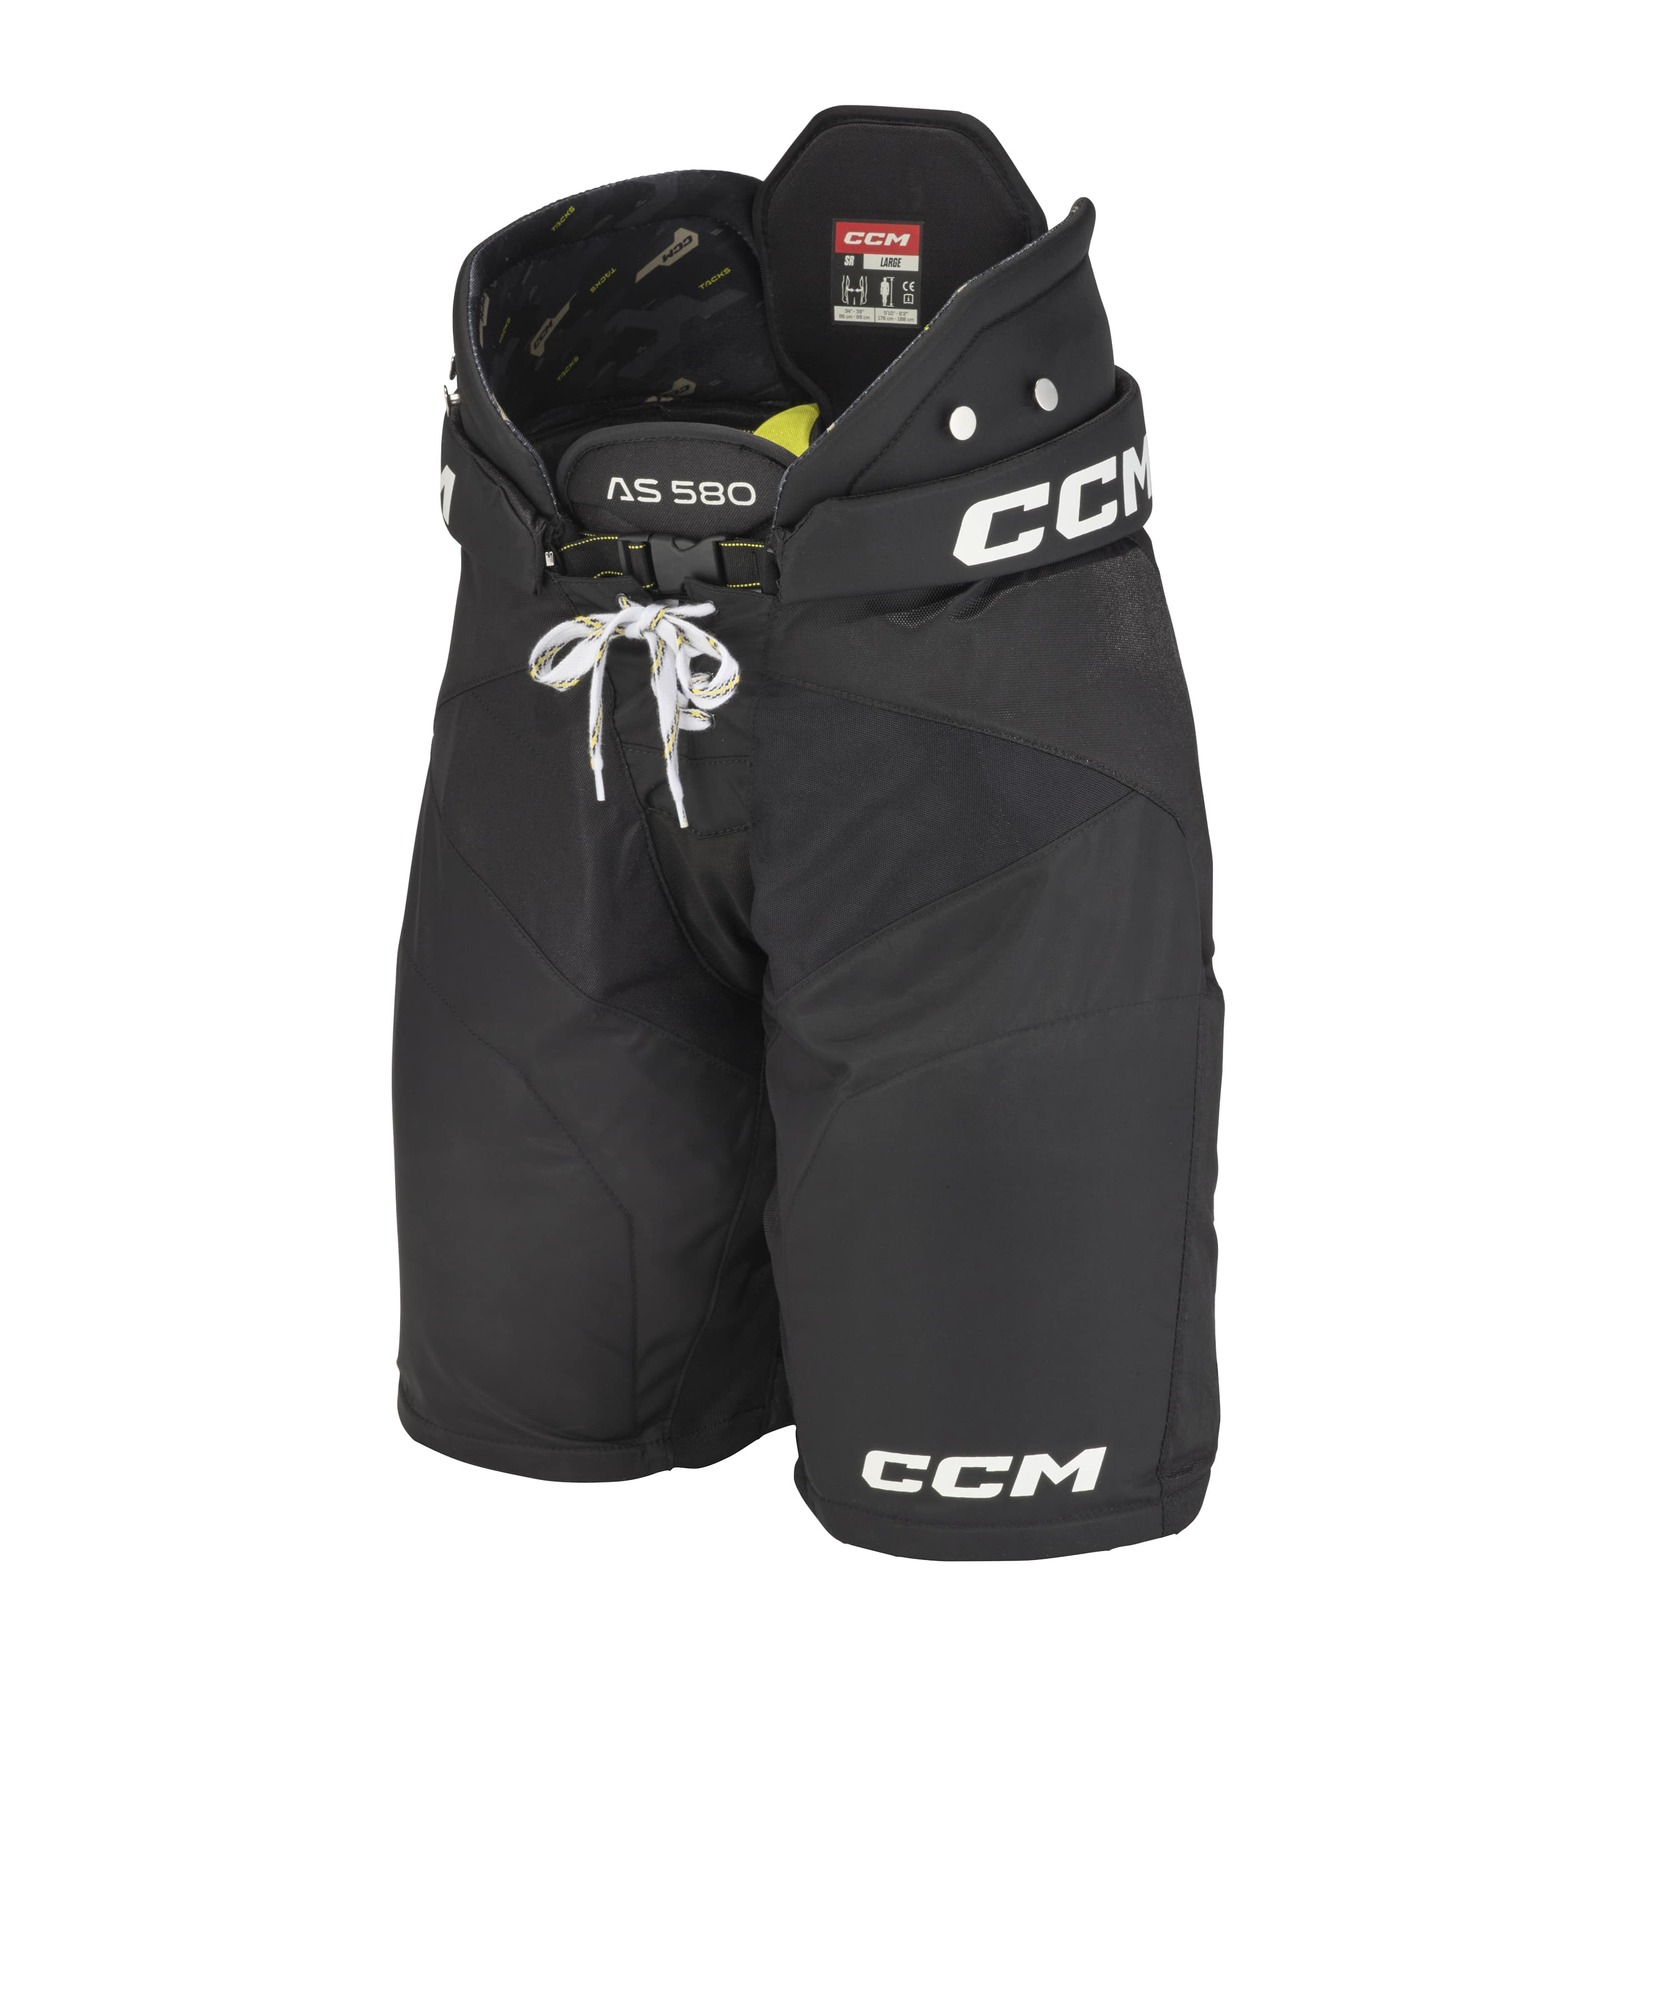 Kalhoty CCM Tacks AS-580 SR, Senior, XL, černá